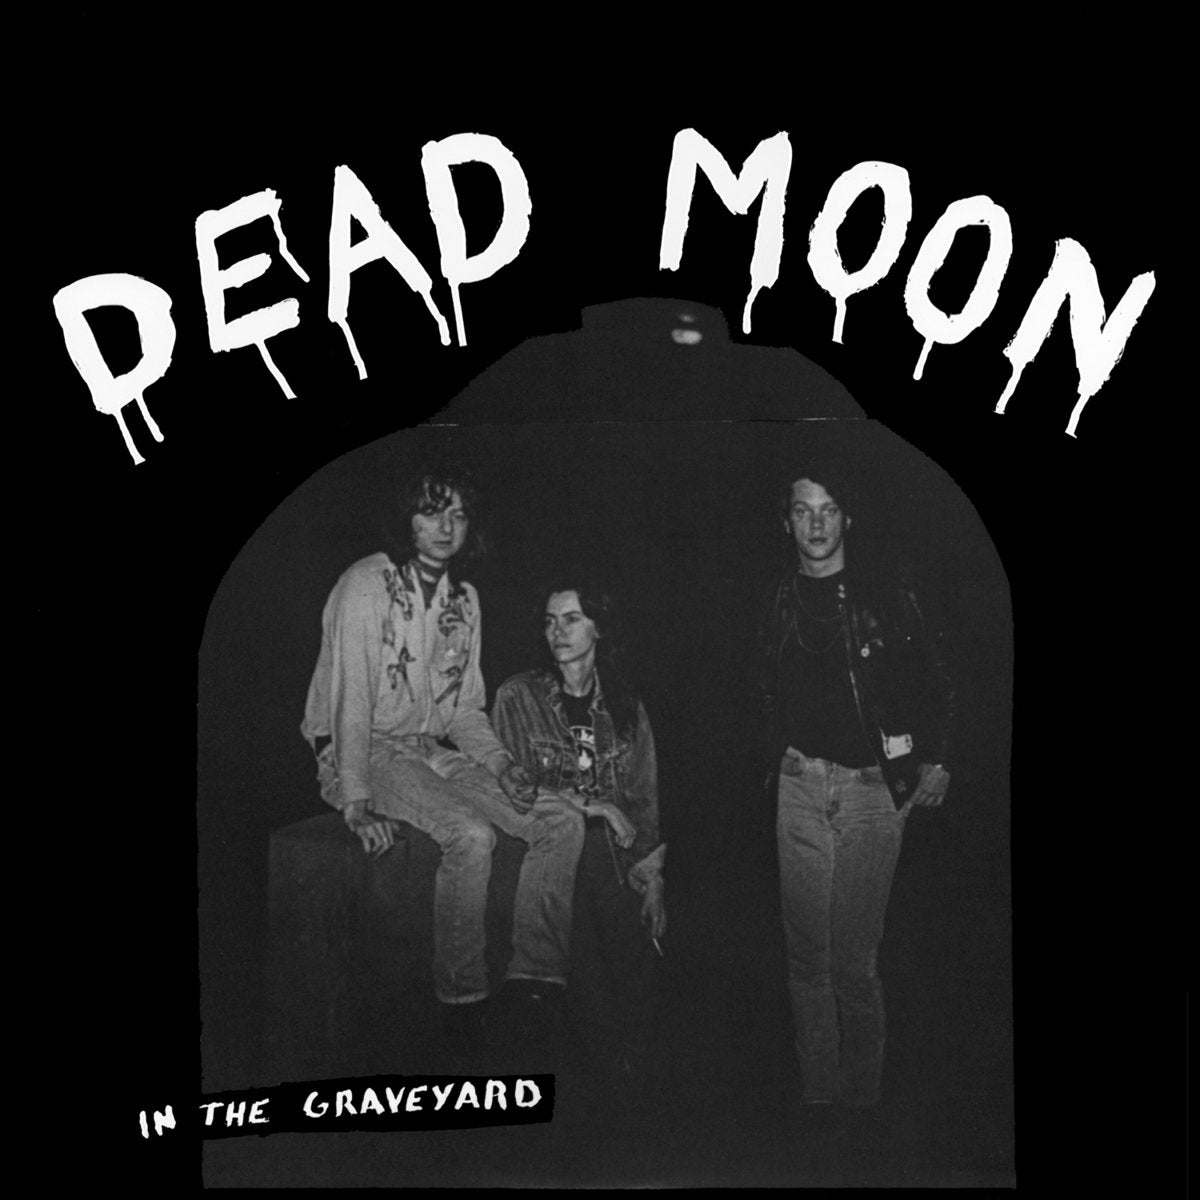 Dead Moon "In The Graveyard" RE LP (2011)